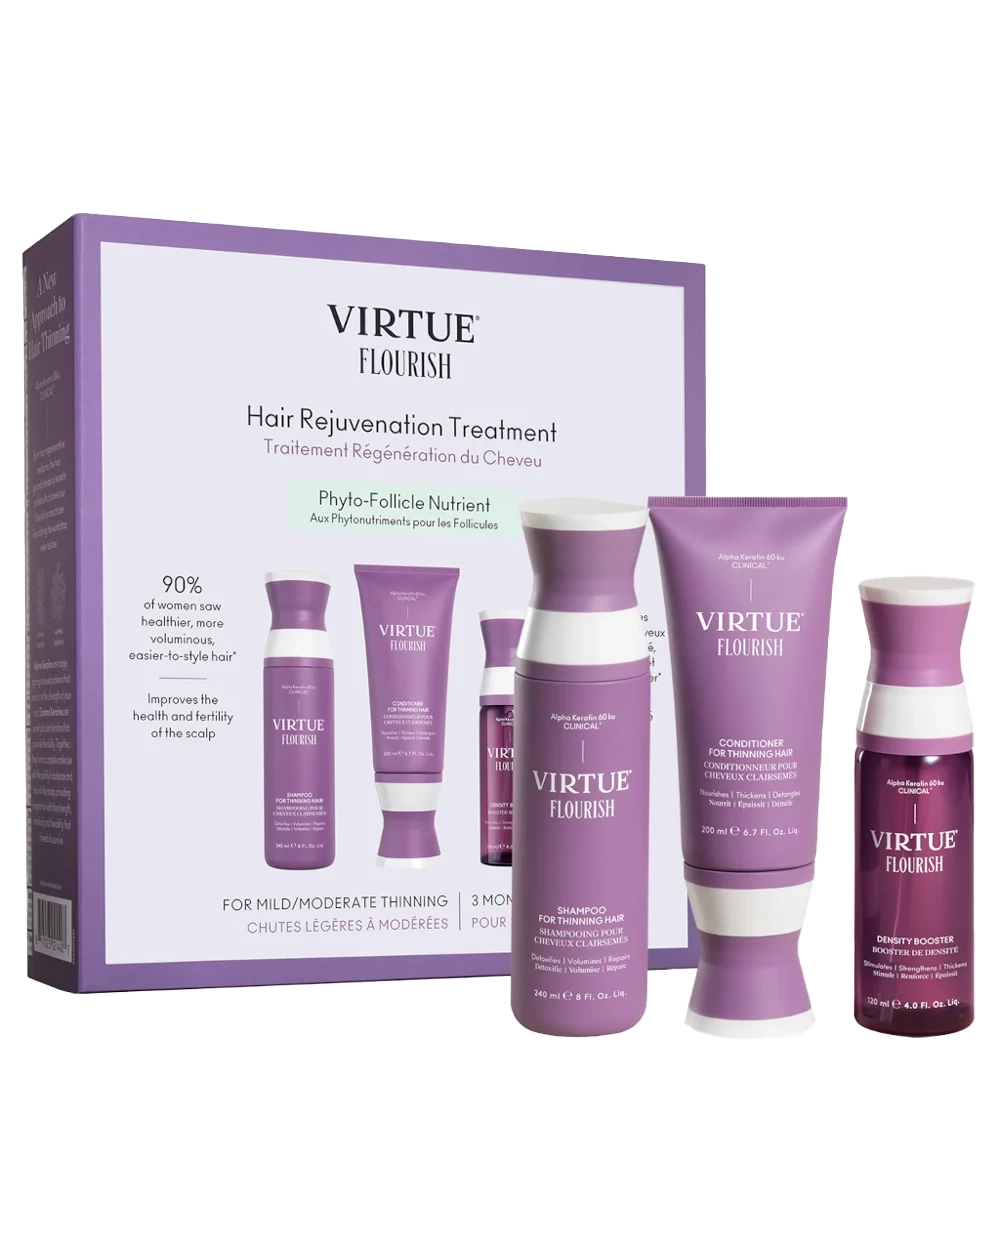 Hair Rejuvenation Treatment (Phyto-follicle Nutrient)